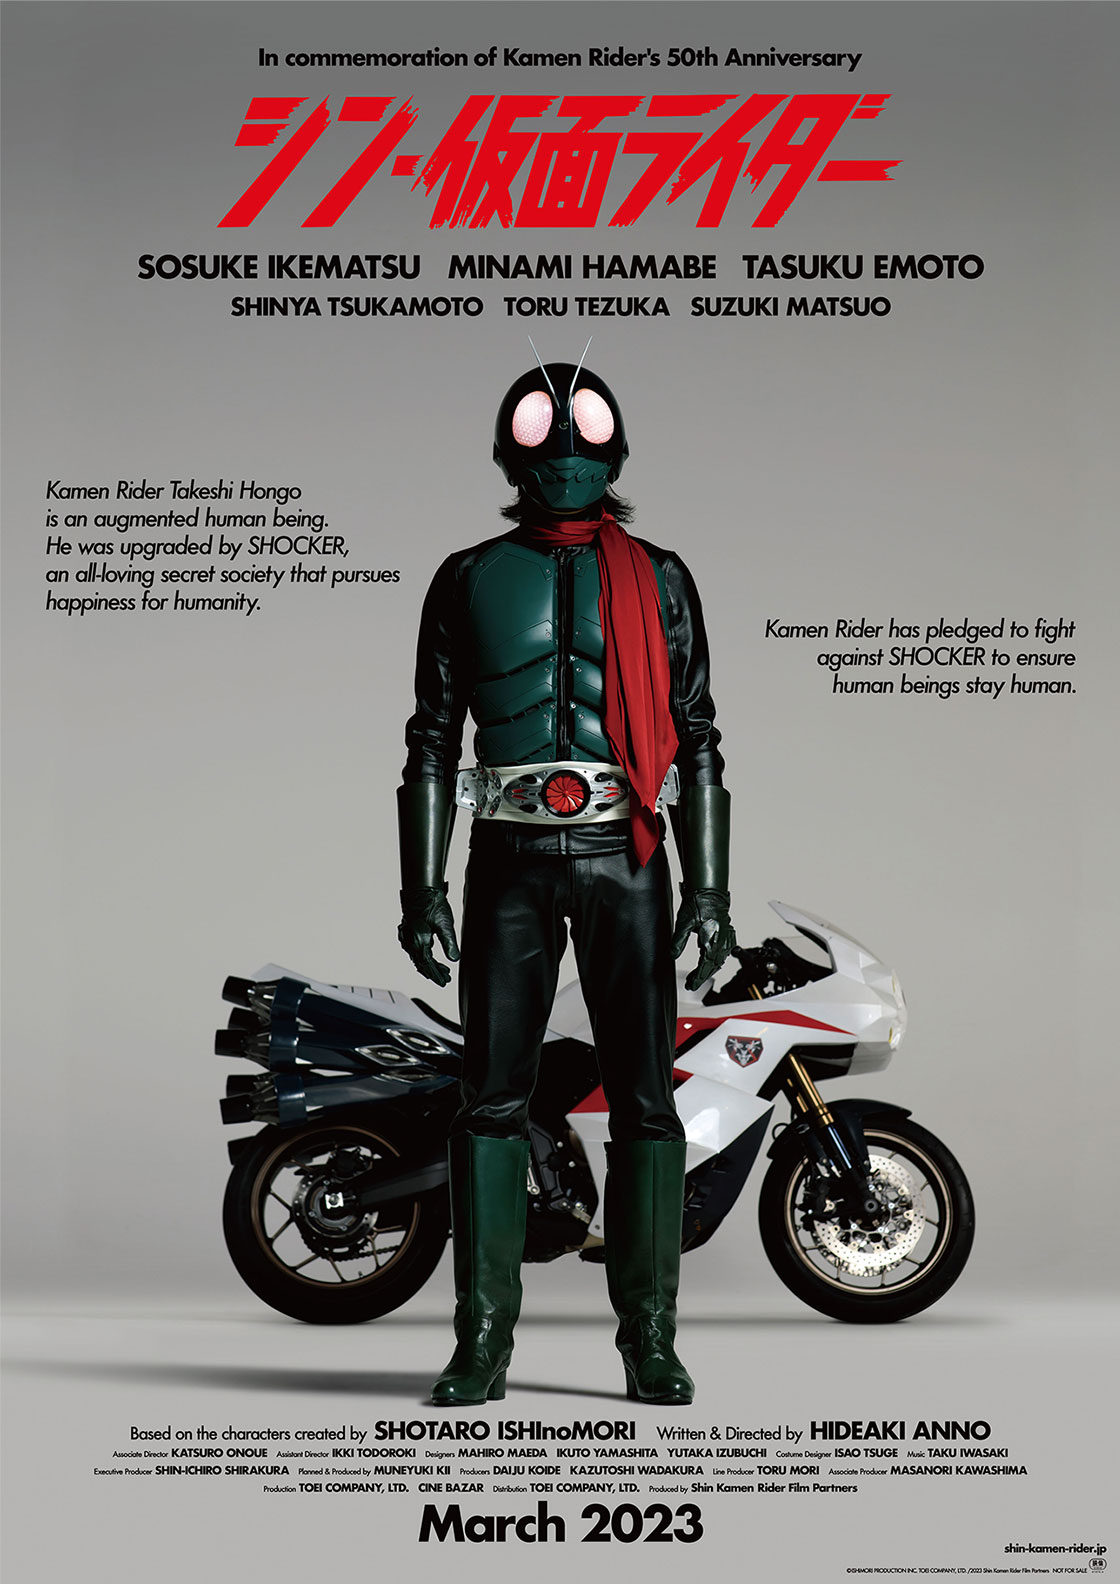 Shin Kamen Rider teaser poster